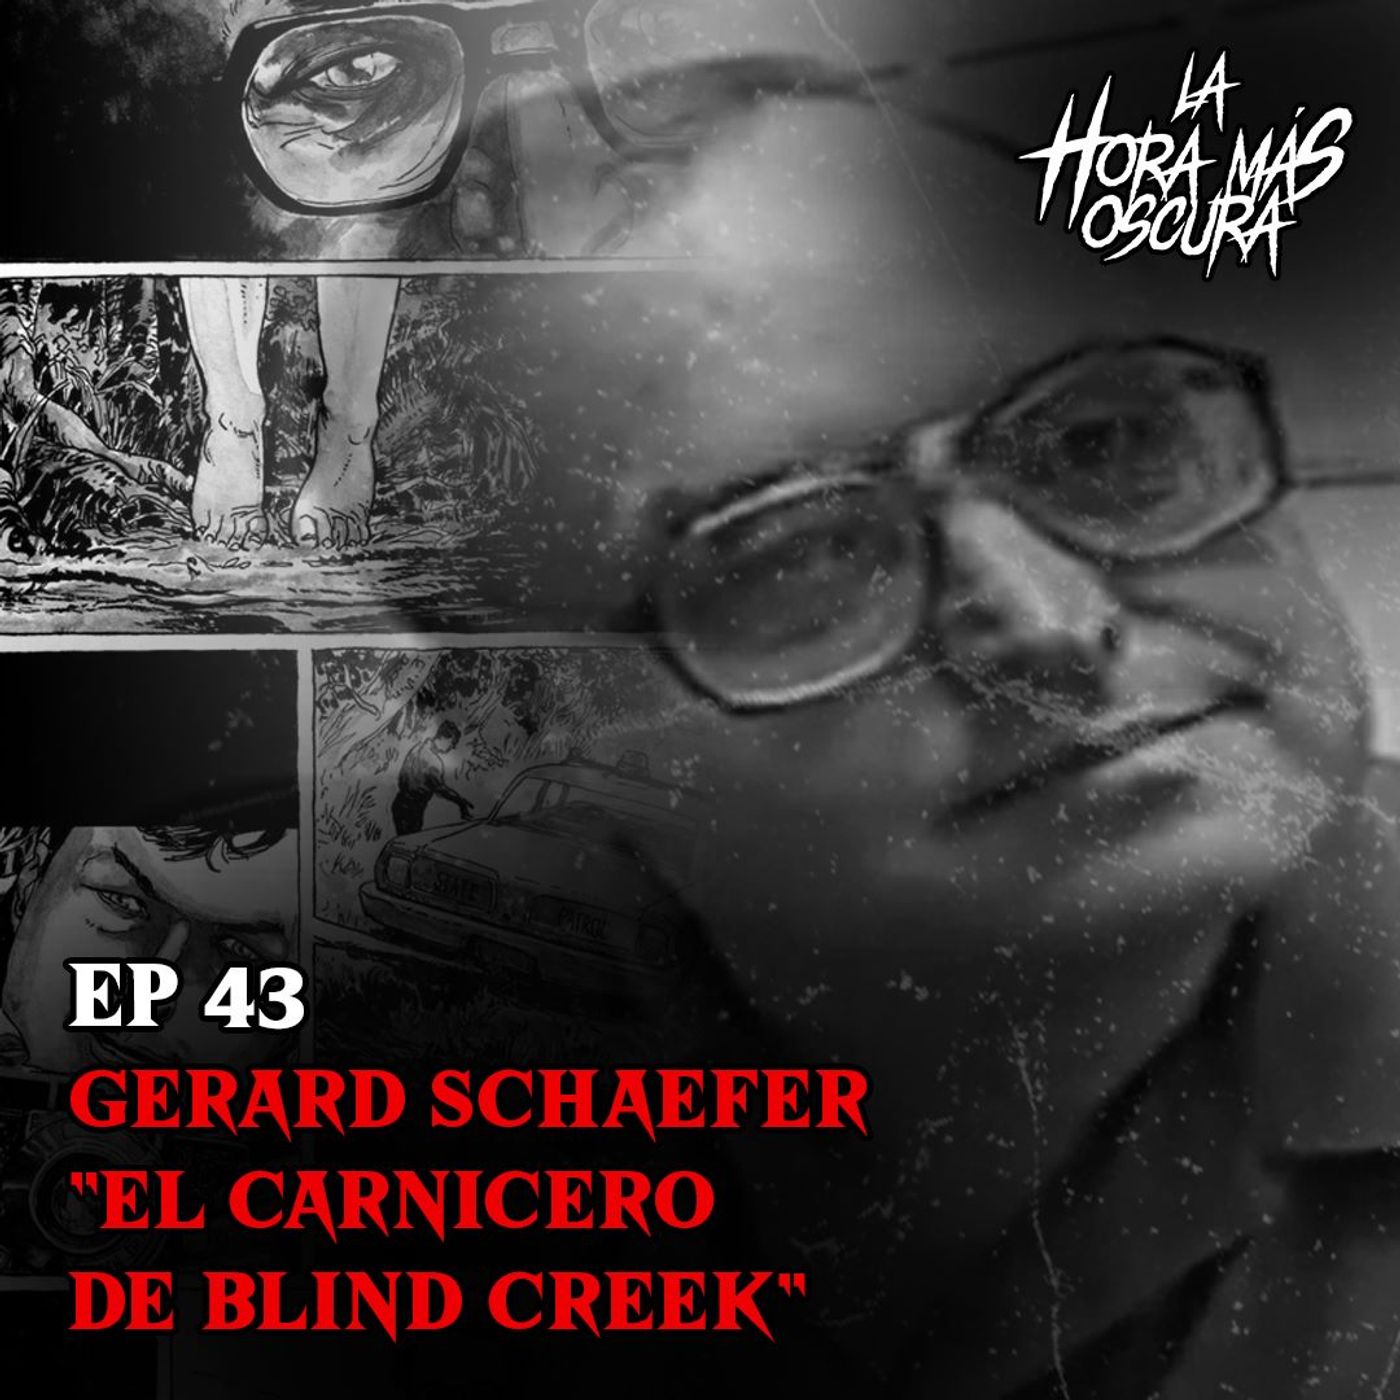 Ep43: Gerald Schaefer "El Carnicero de Blind Creek"